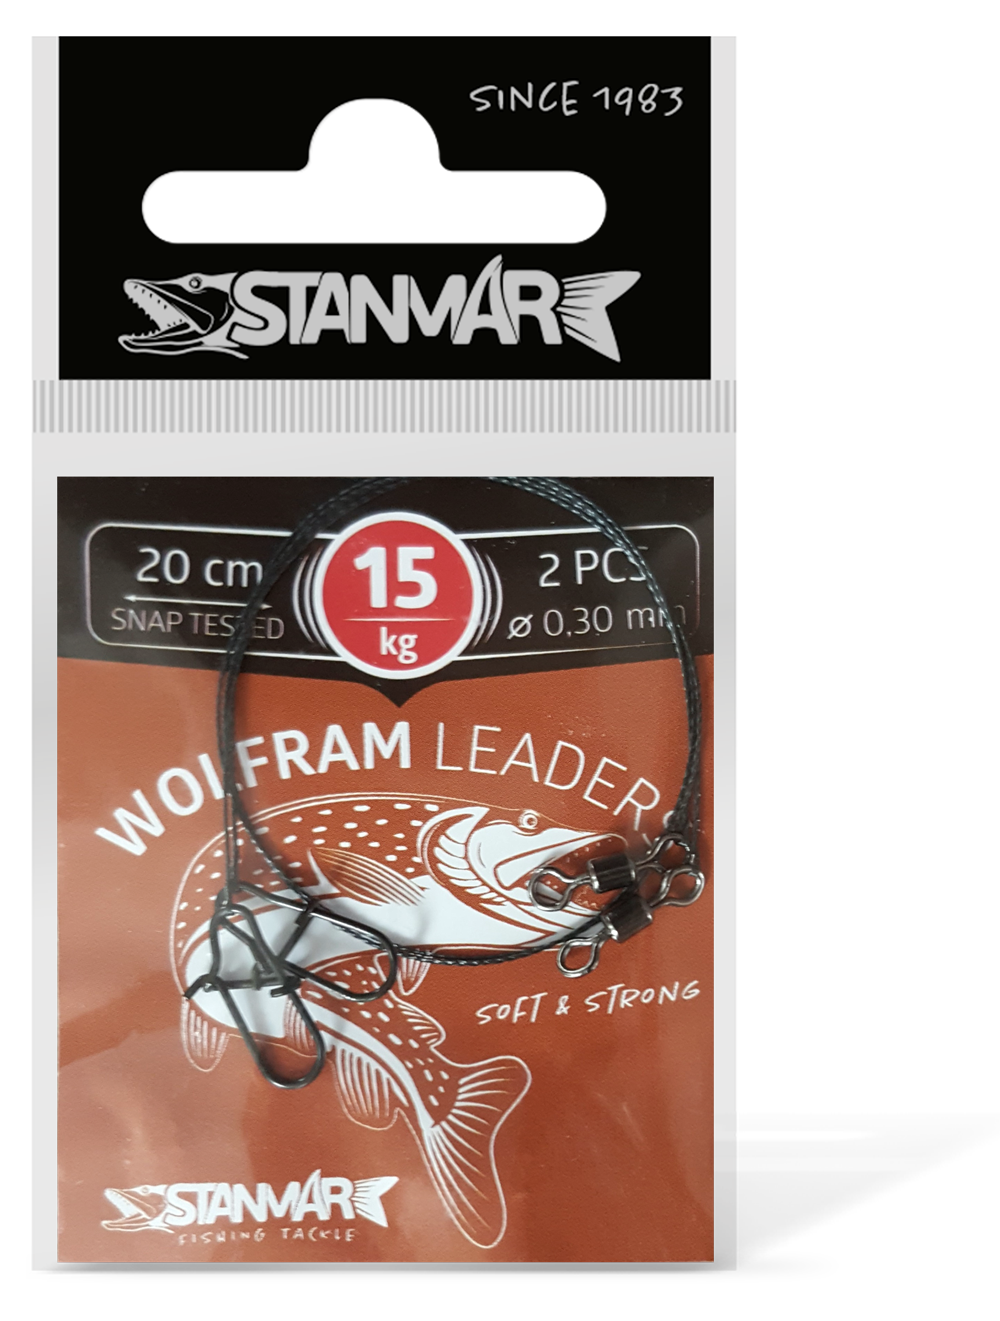 STAN-MAR Lanko wolframové 20cm 15kg(20 ks, 10x2)